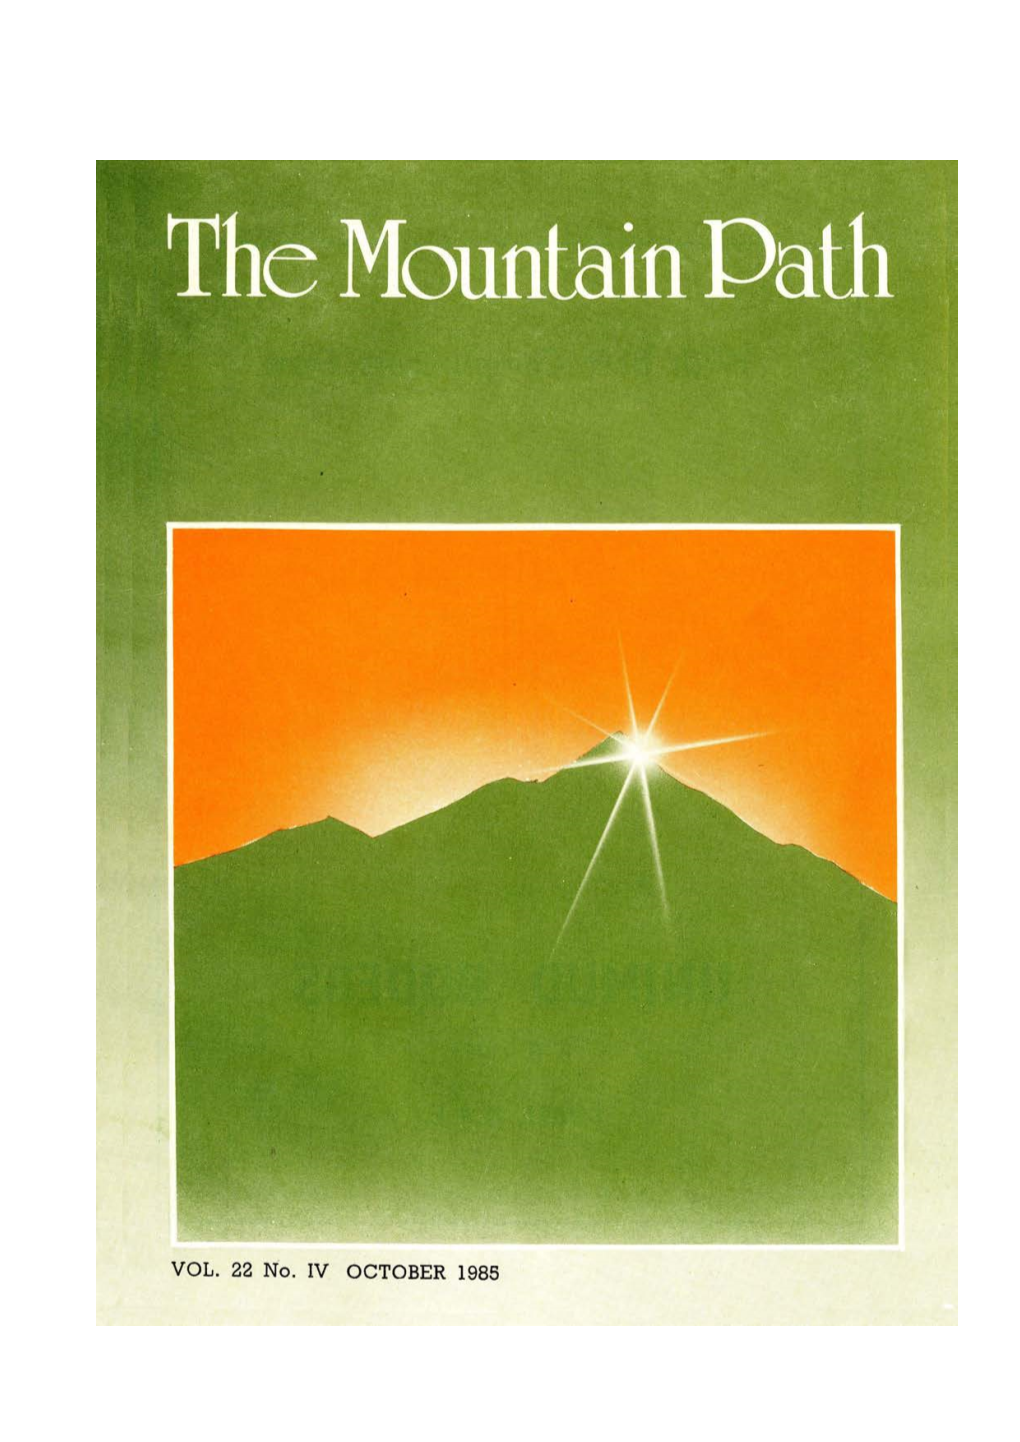 The Mountain Path Vol. 22 No. 4, Oct 1985